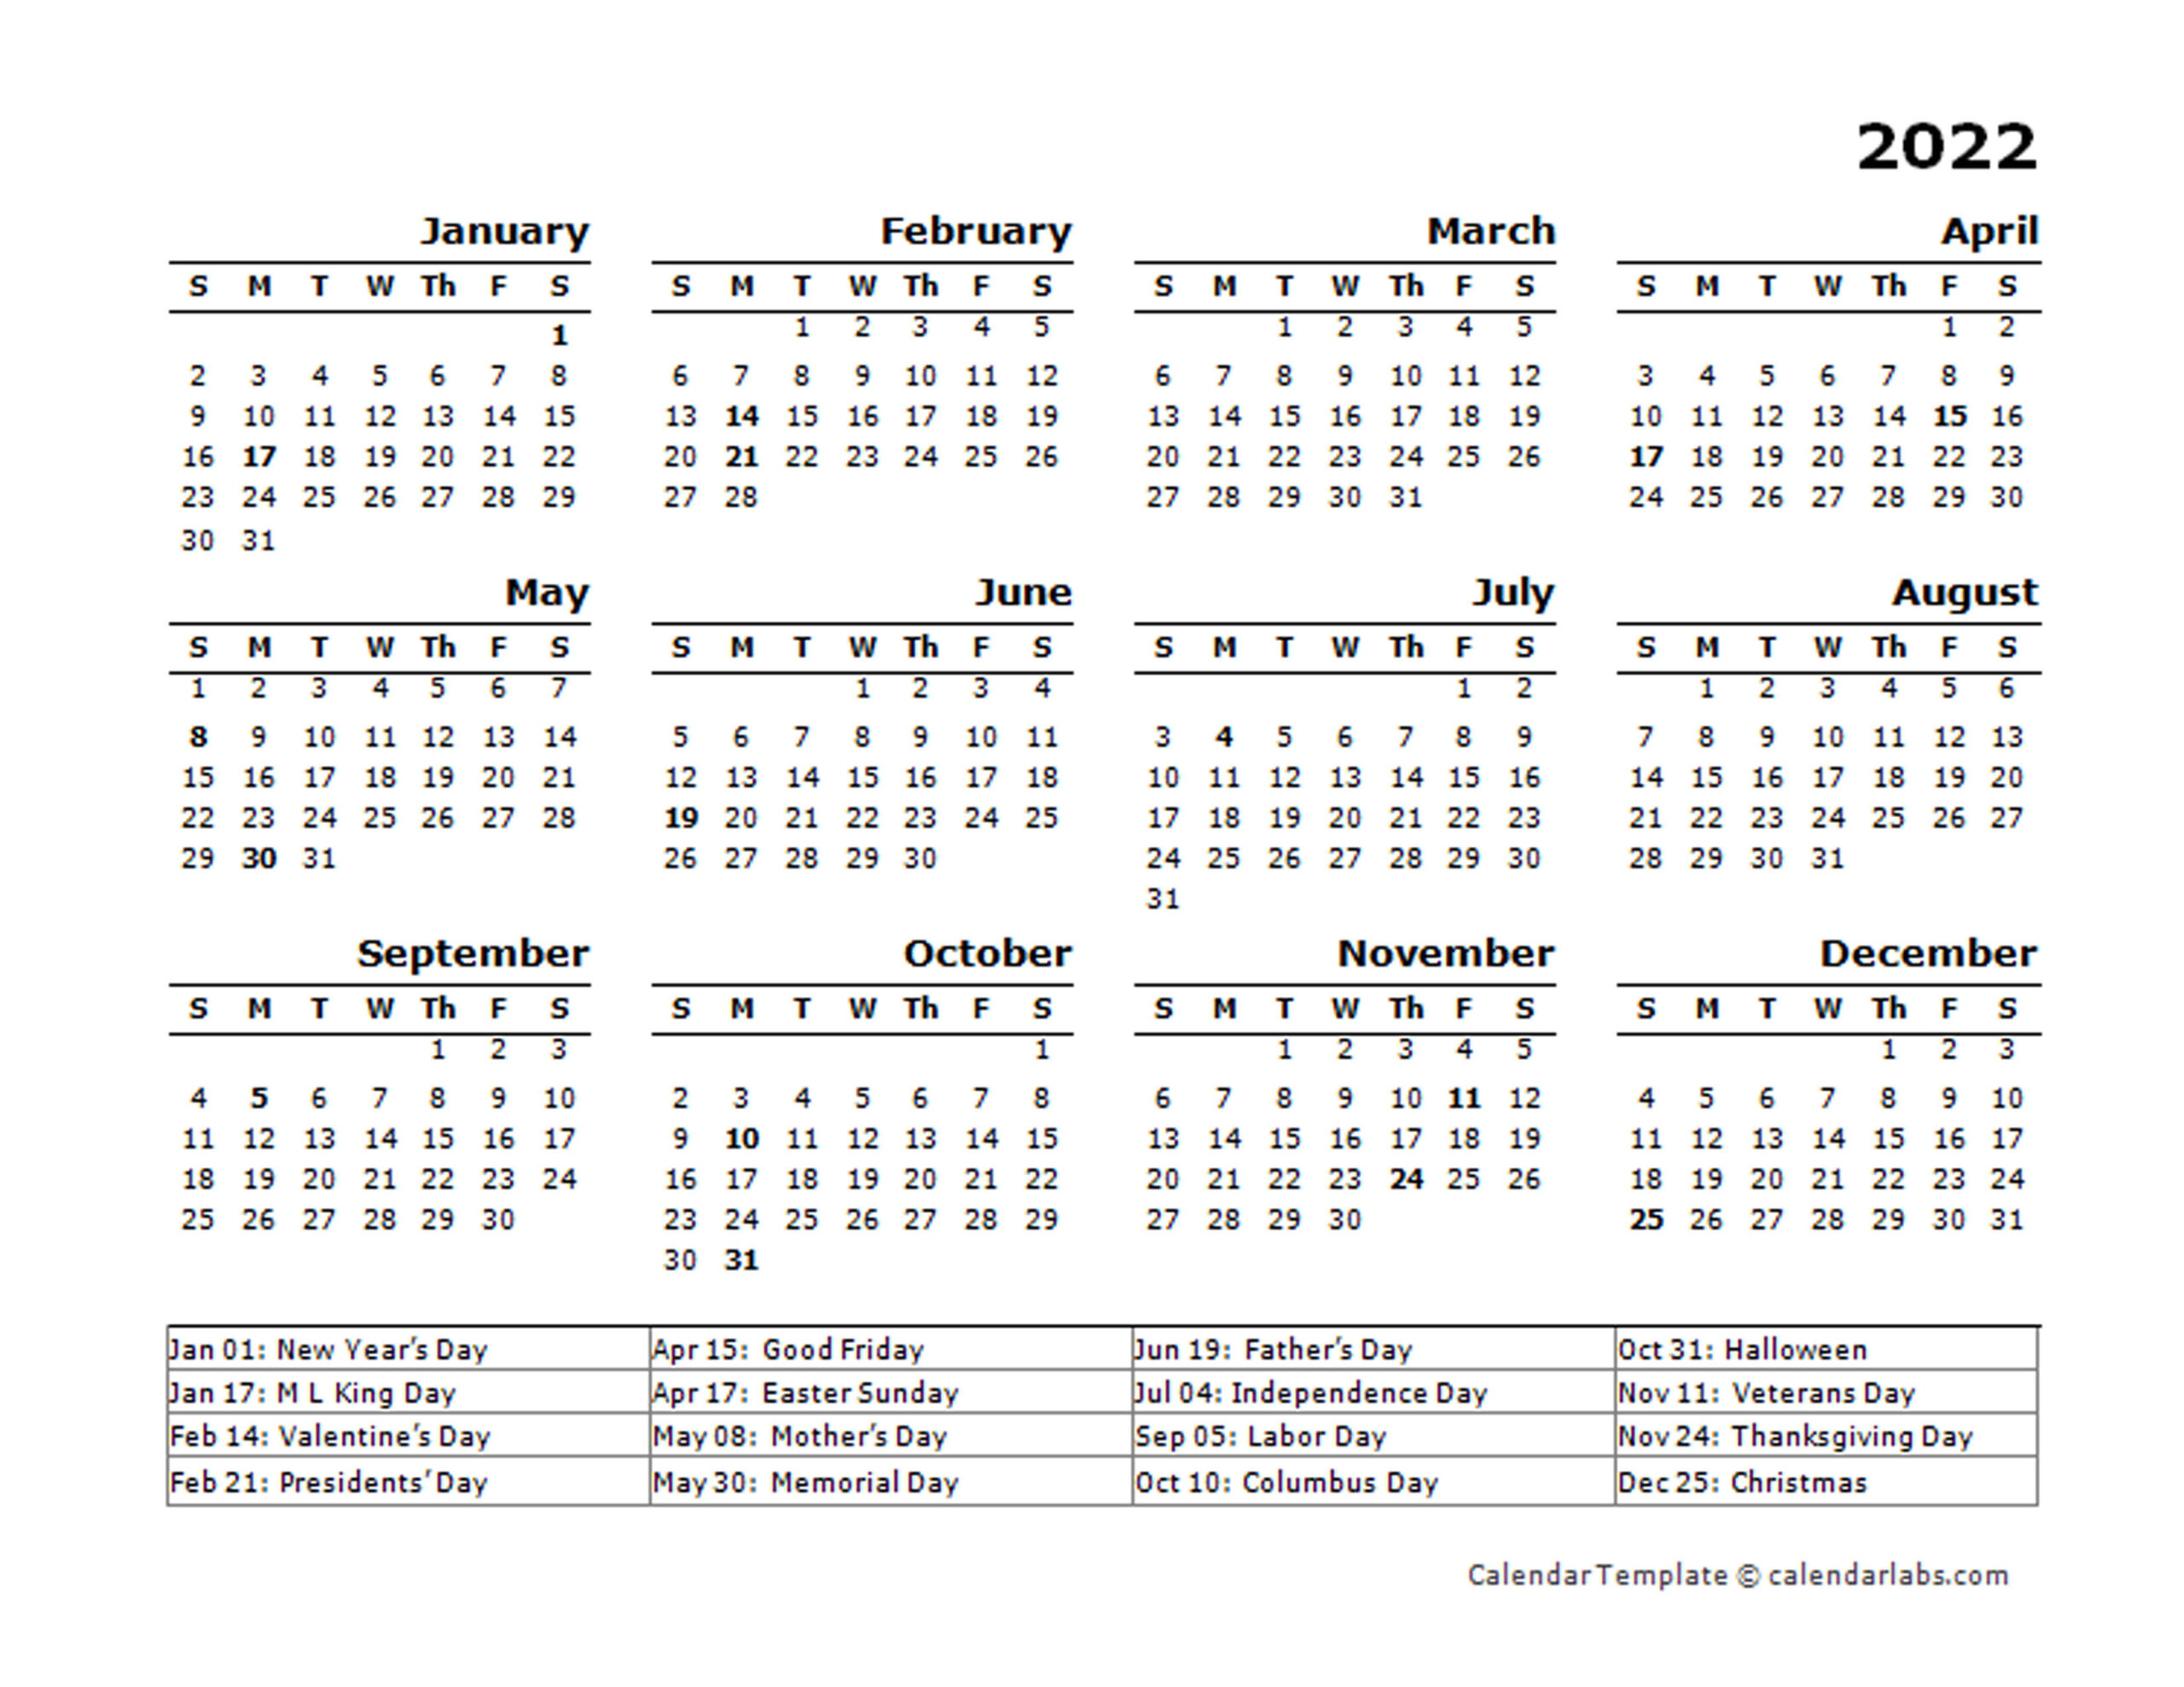 2022 Yearly Calendar Template With Us Holidays - Free  Printable Calendar 2022 Hong Kong